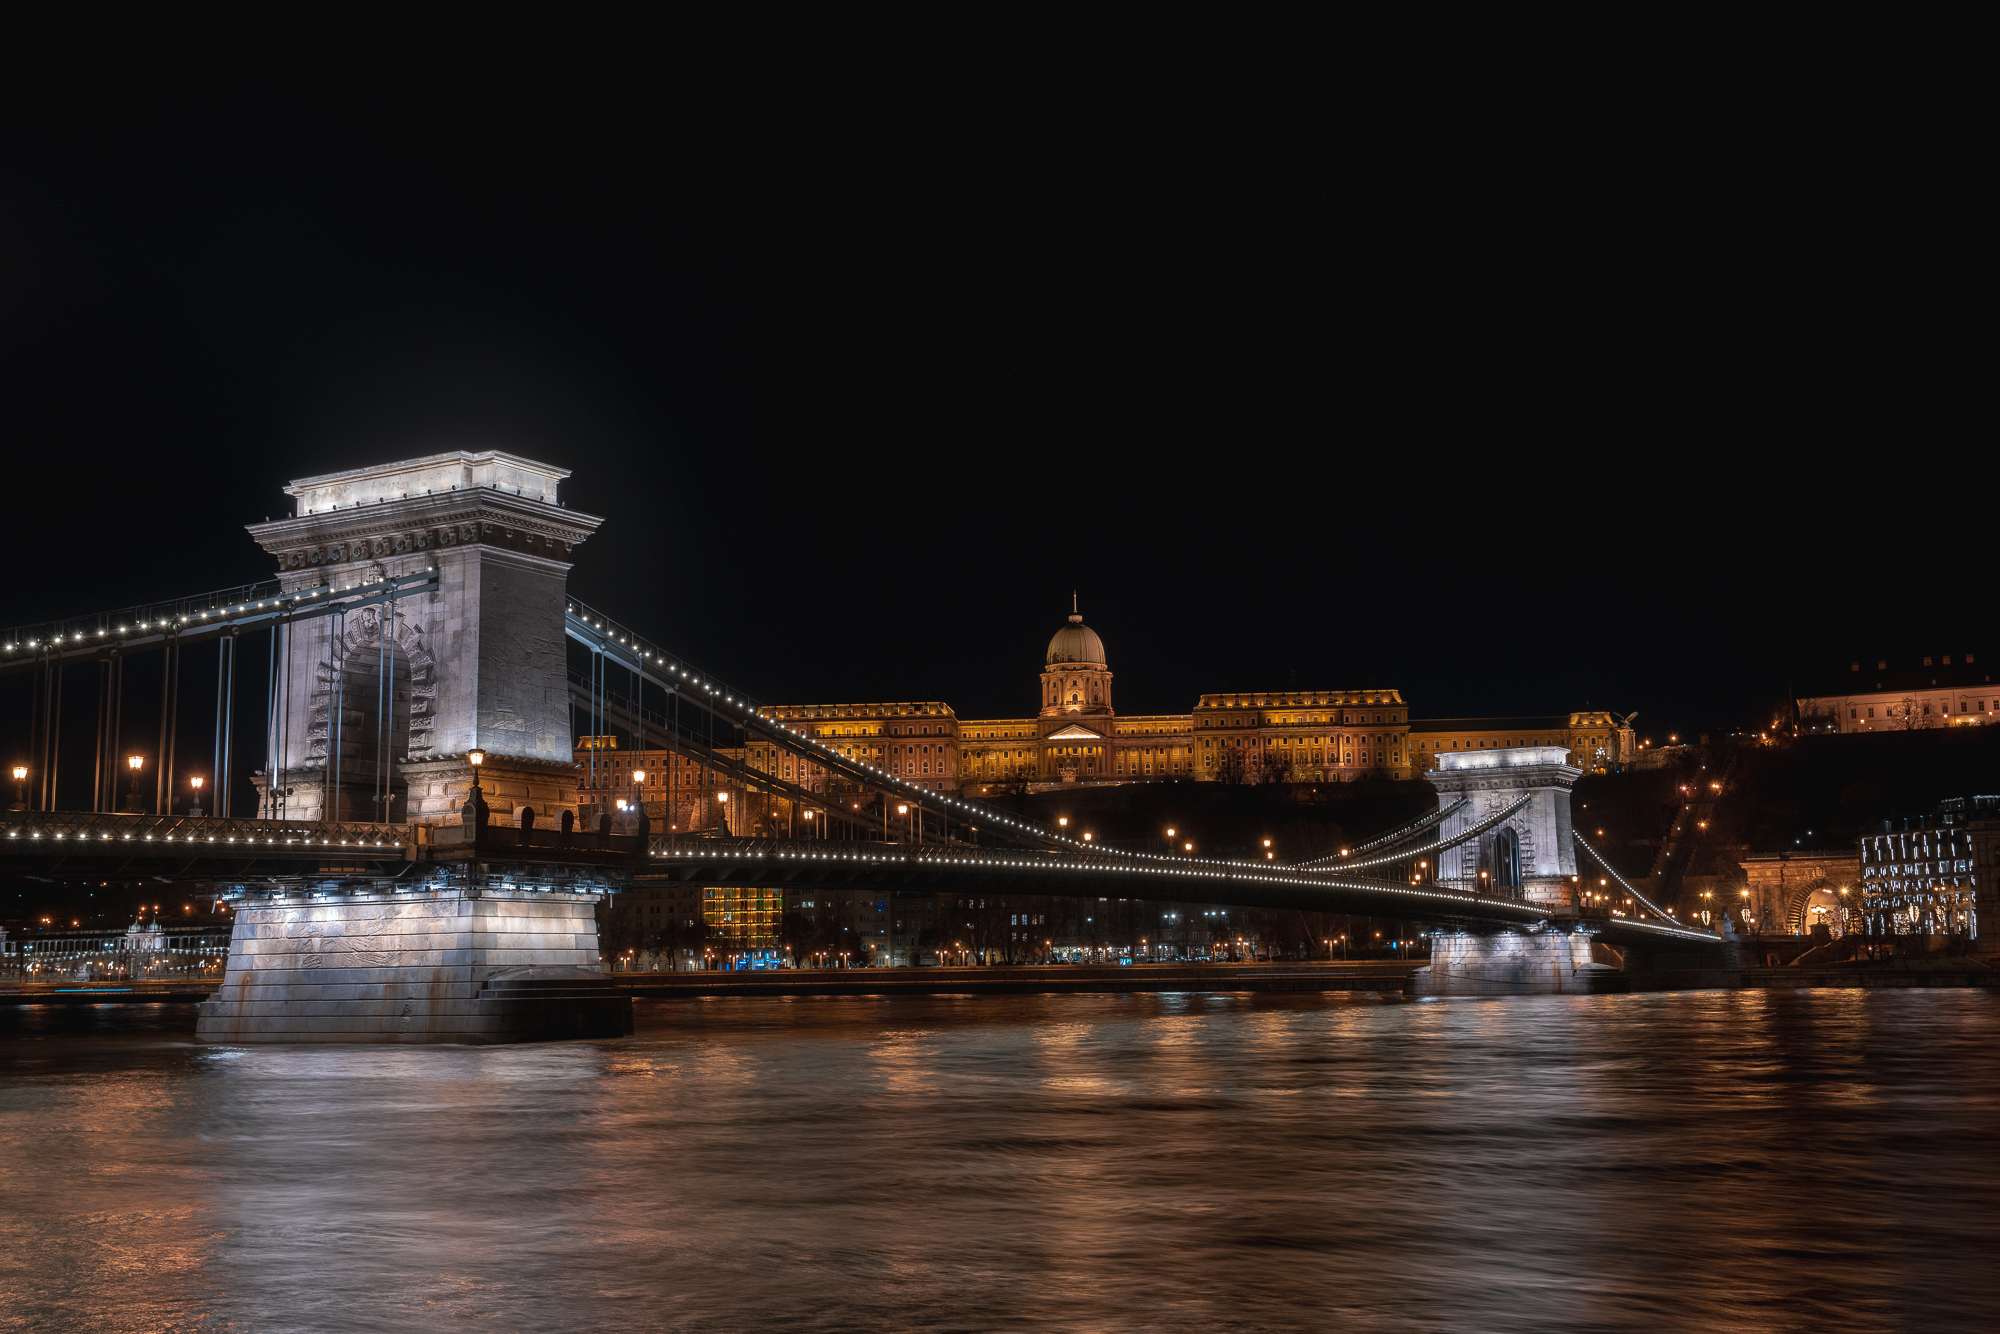 Széchenyi Chain Bridge in Budapest at night